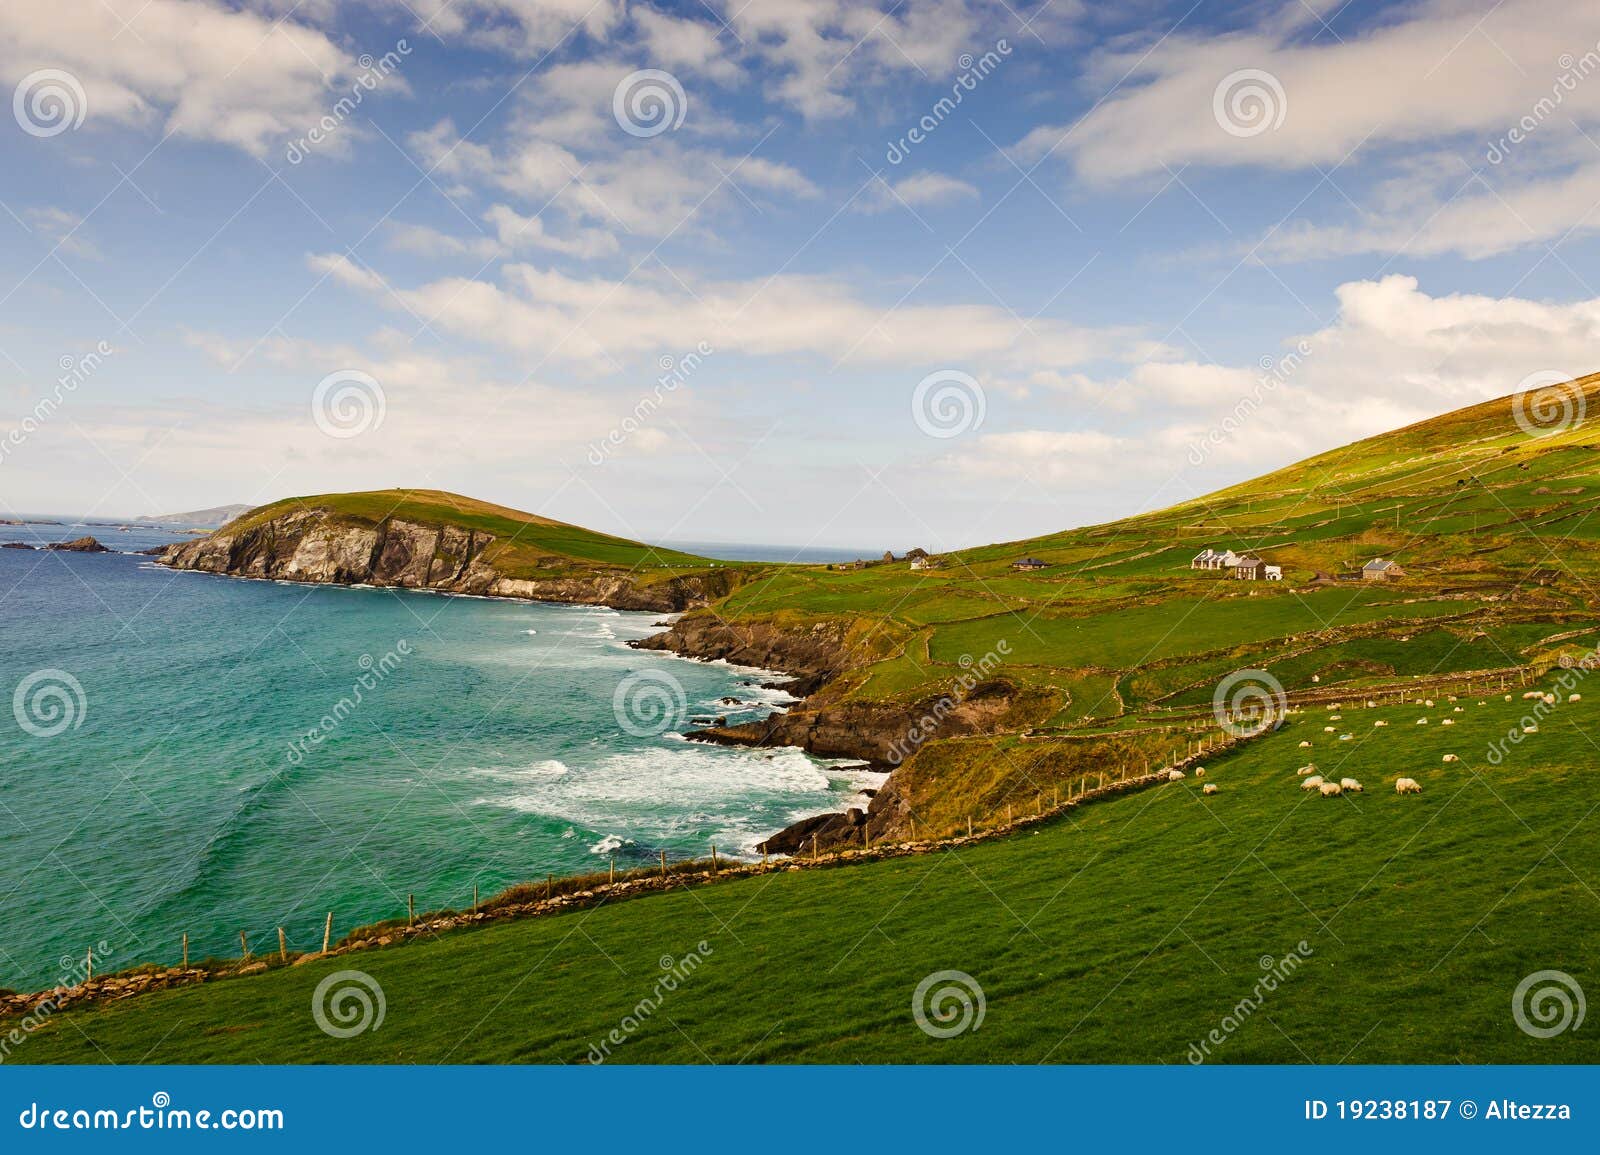 cliffs on dingle peninsula, ireland